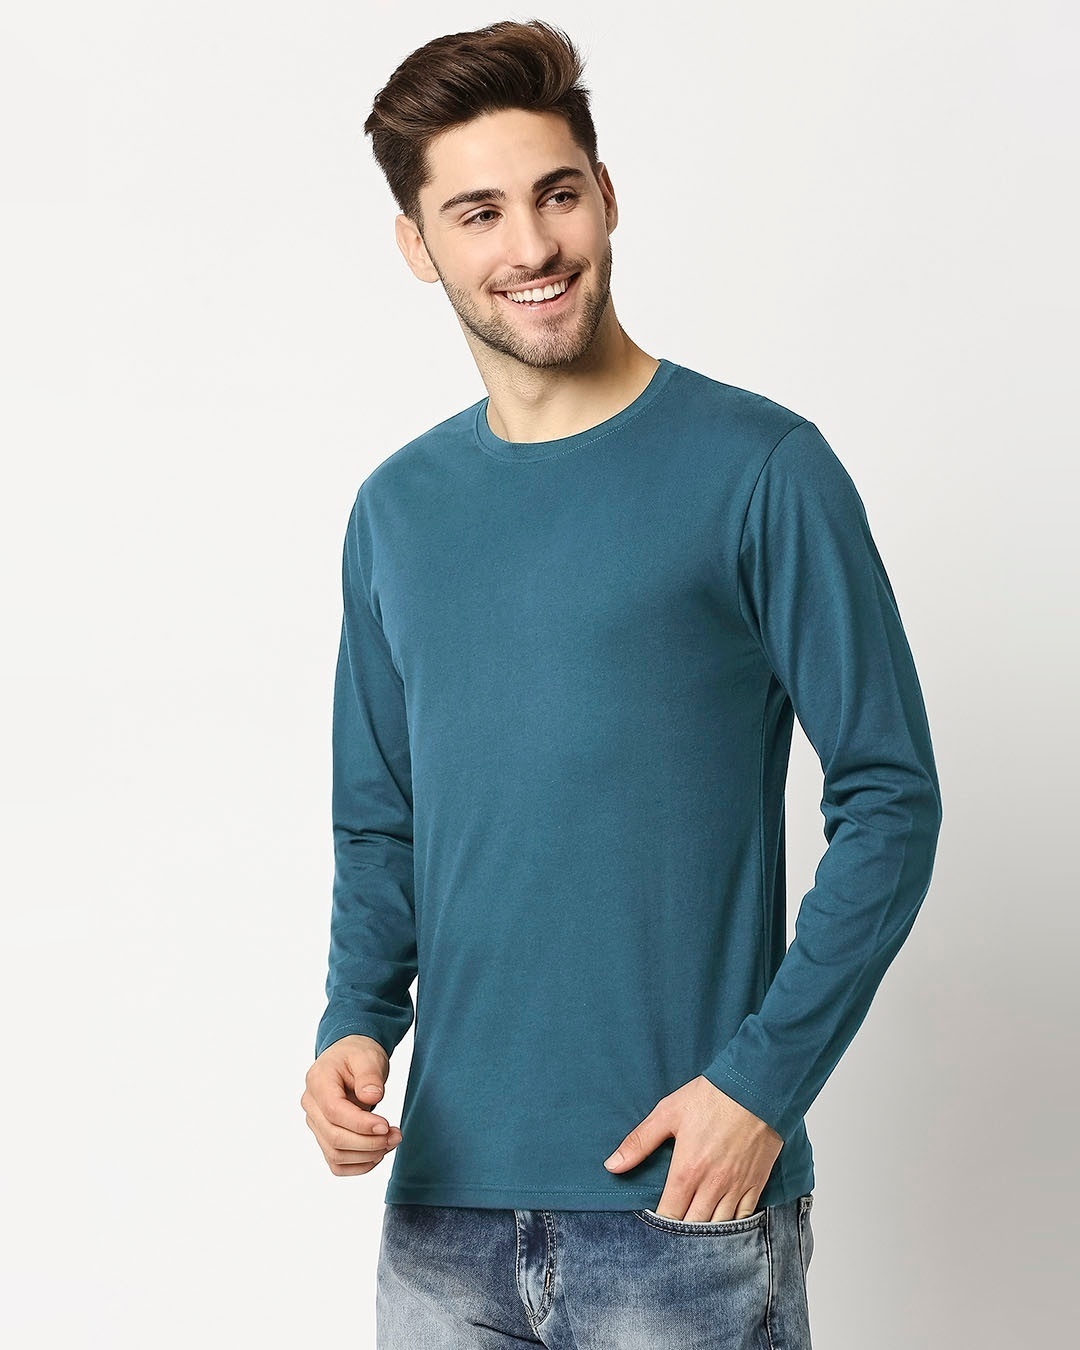 Shop Atlantic Deep Full Sleeve T-Shirt-Design